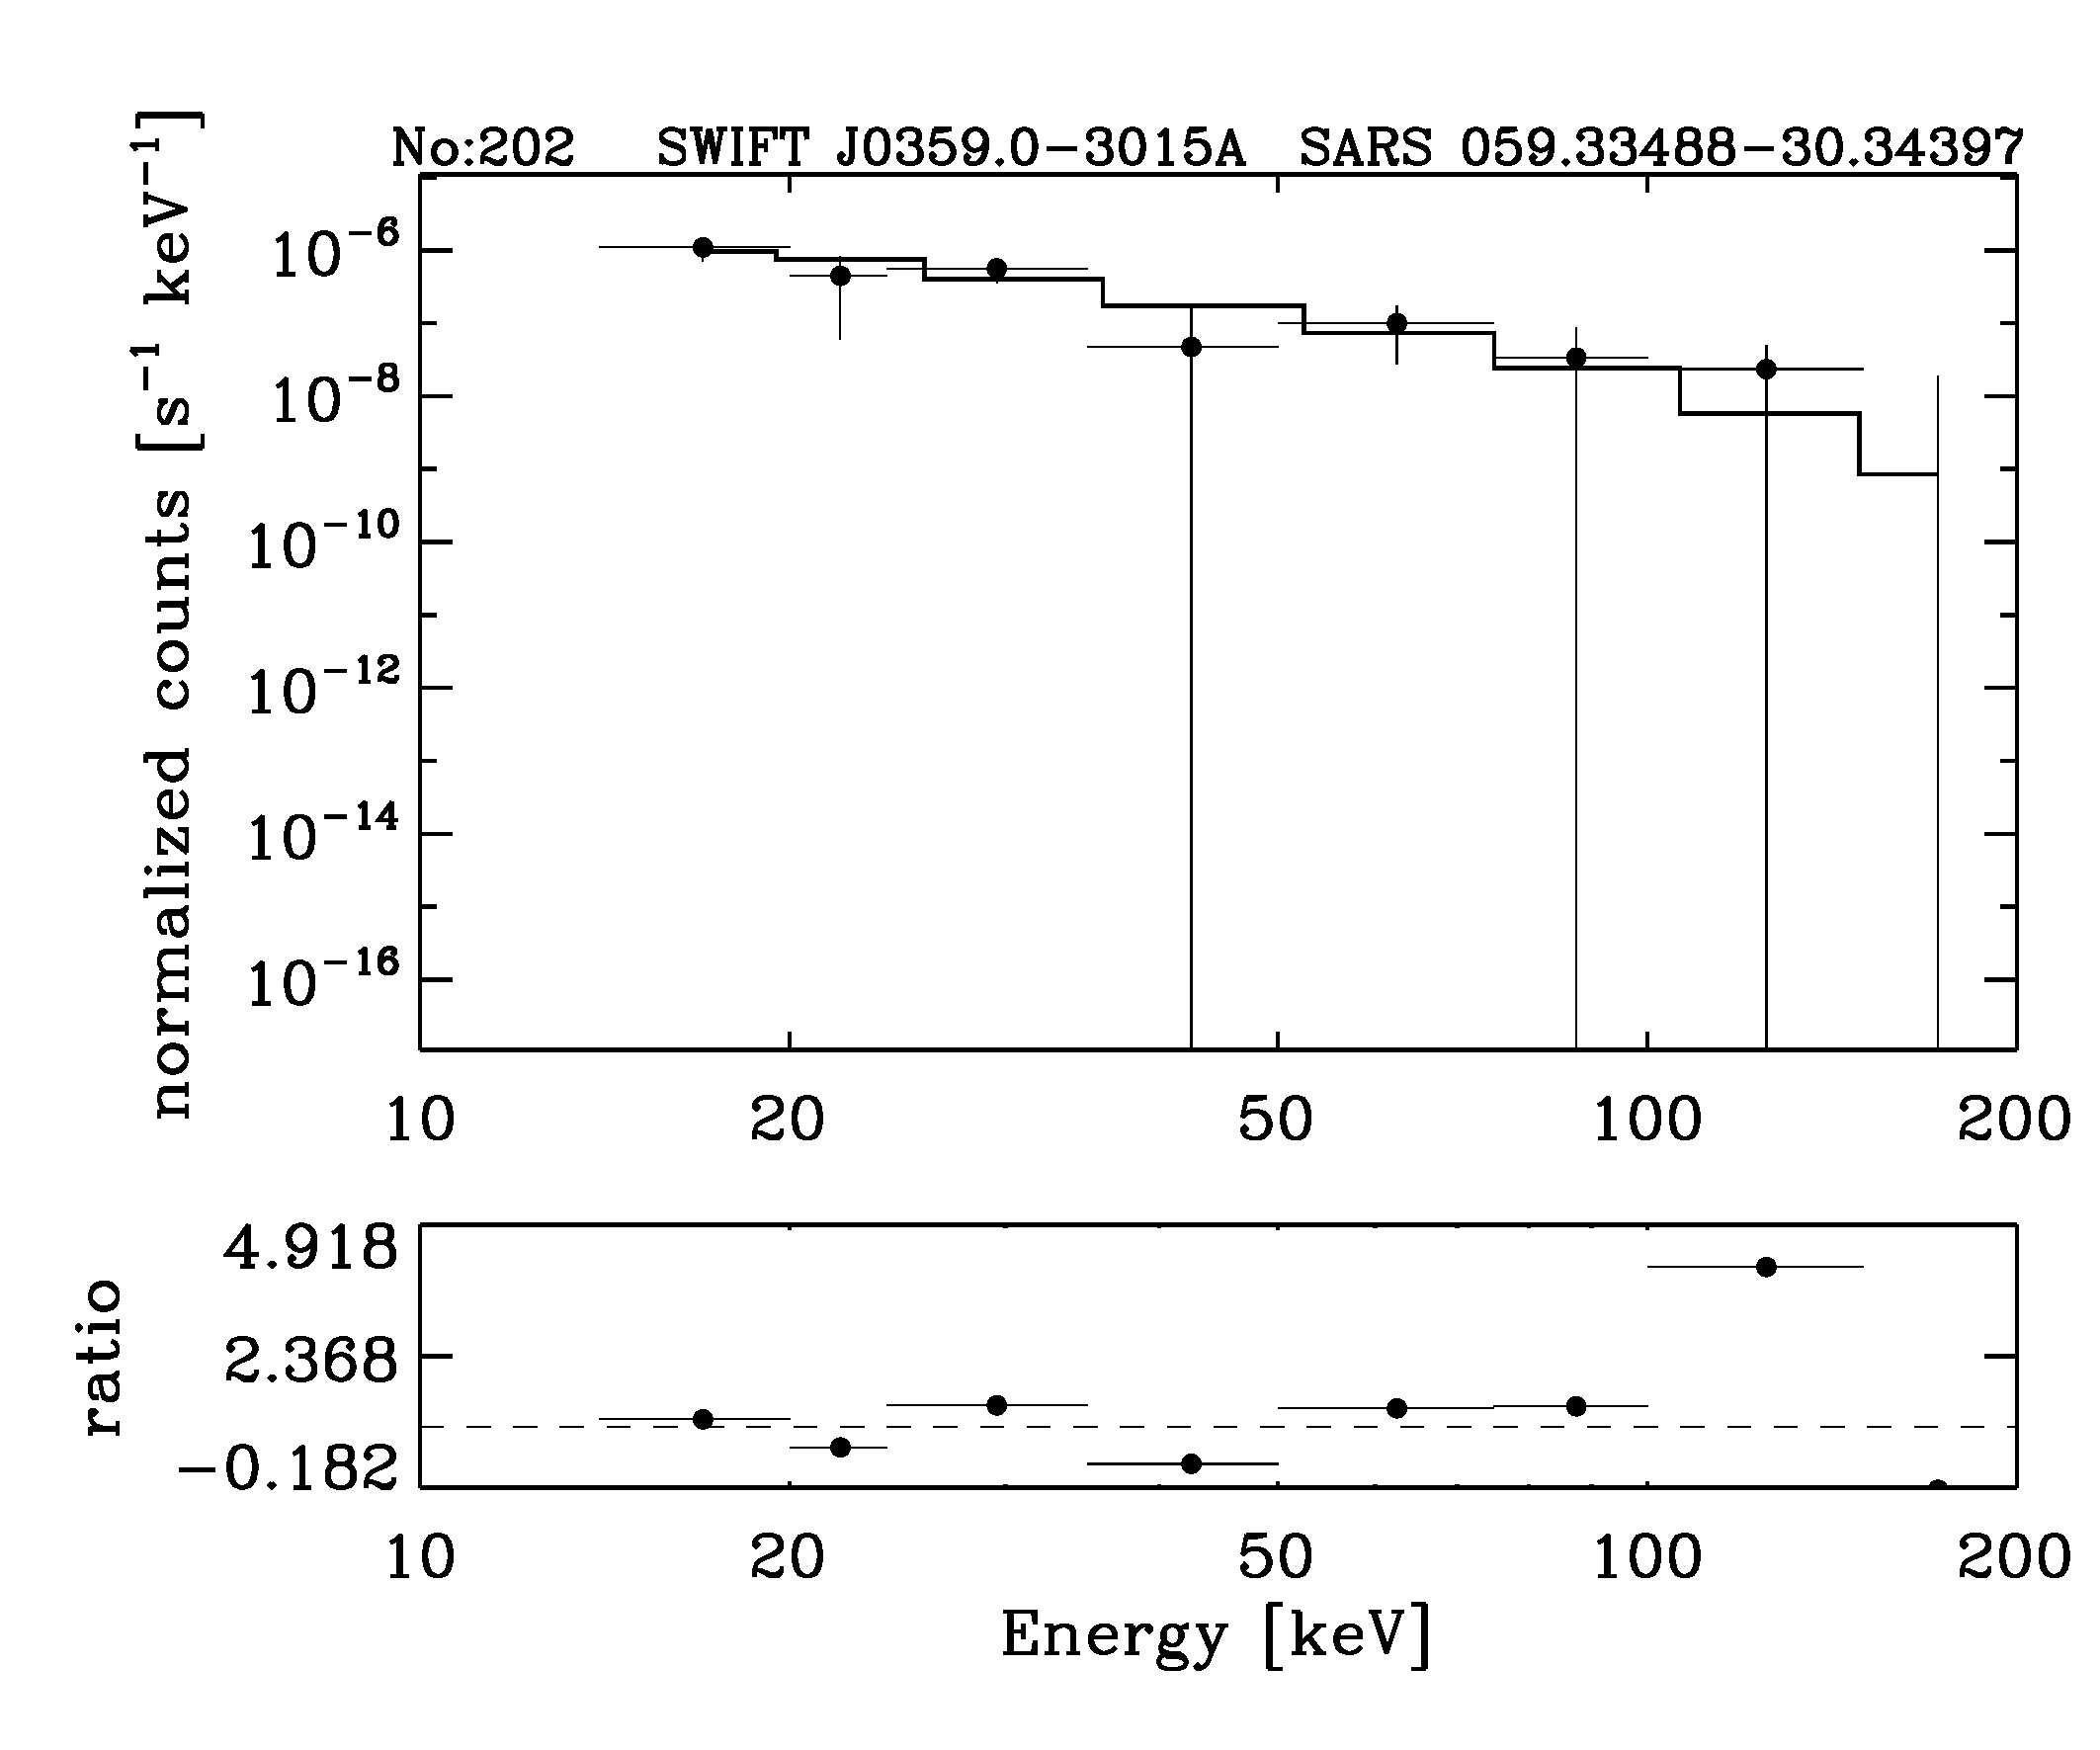 BAT Spectrum for SWIFT J0359.0-3015A